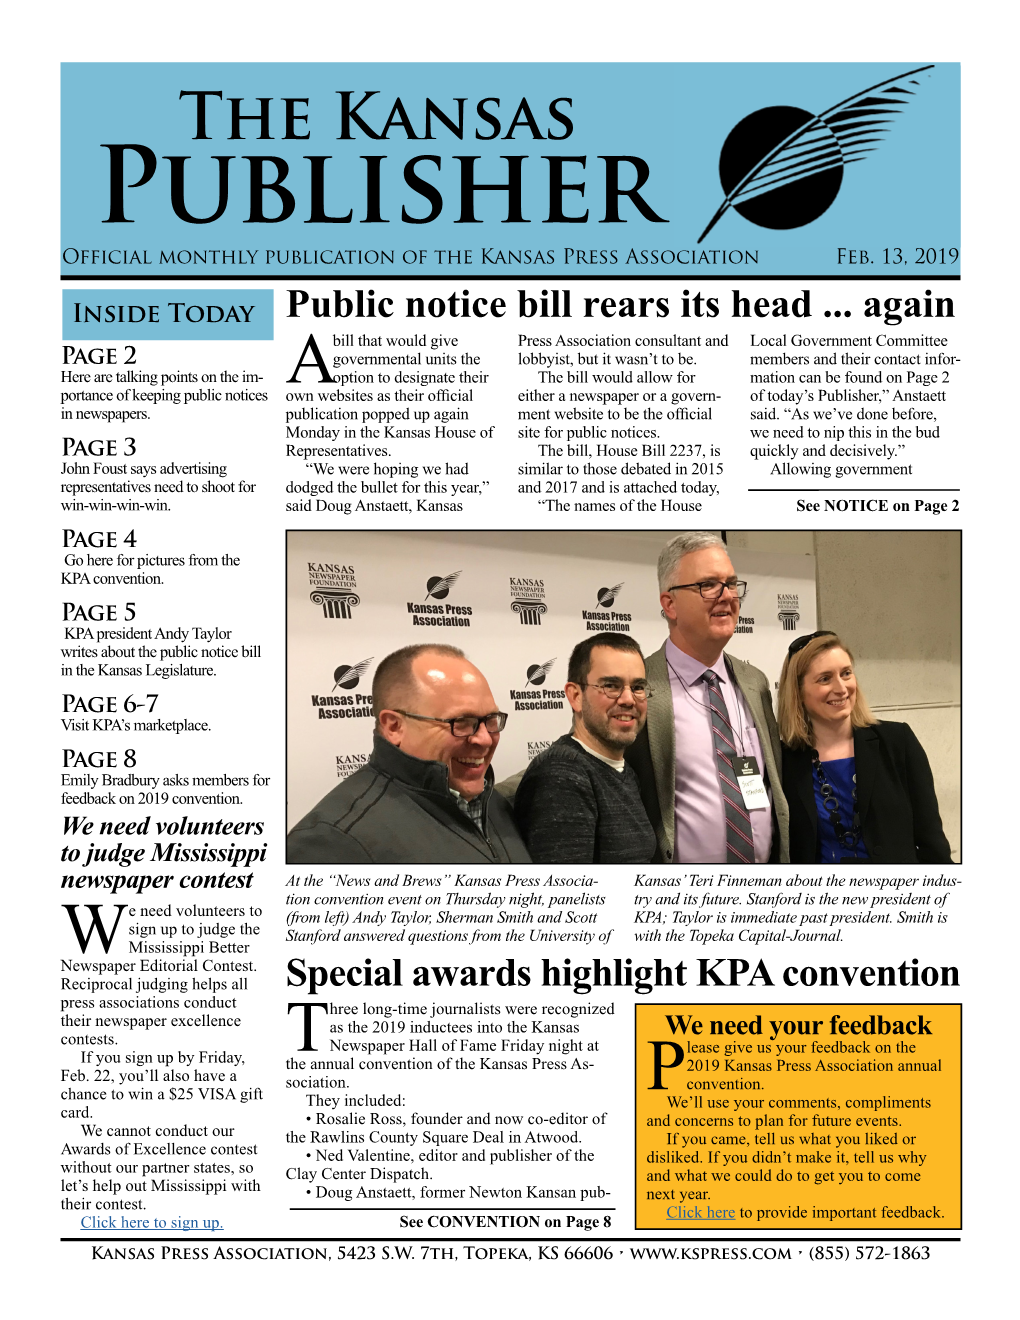 Kansas Publisher Official Monthly Publication of the Kansas Press Association Feb